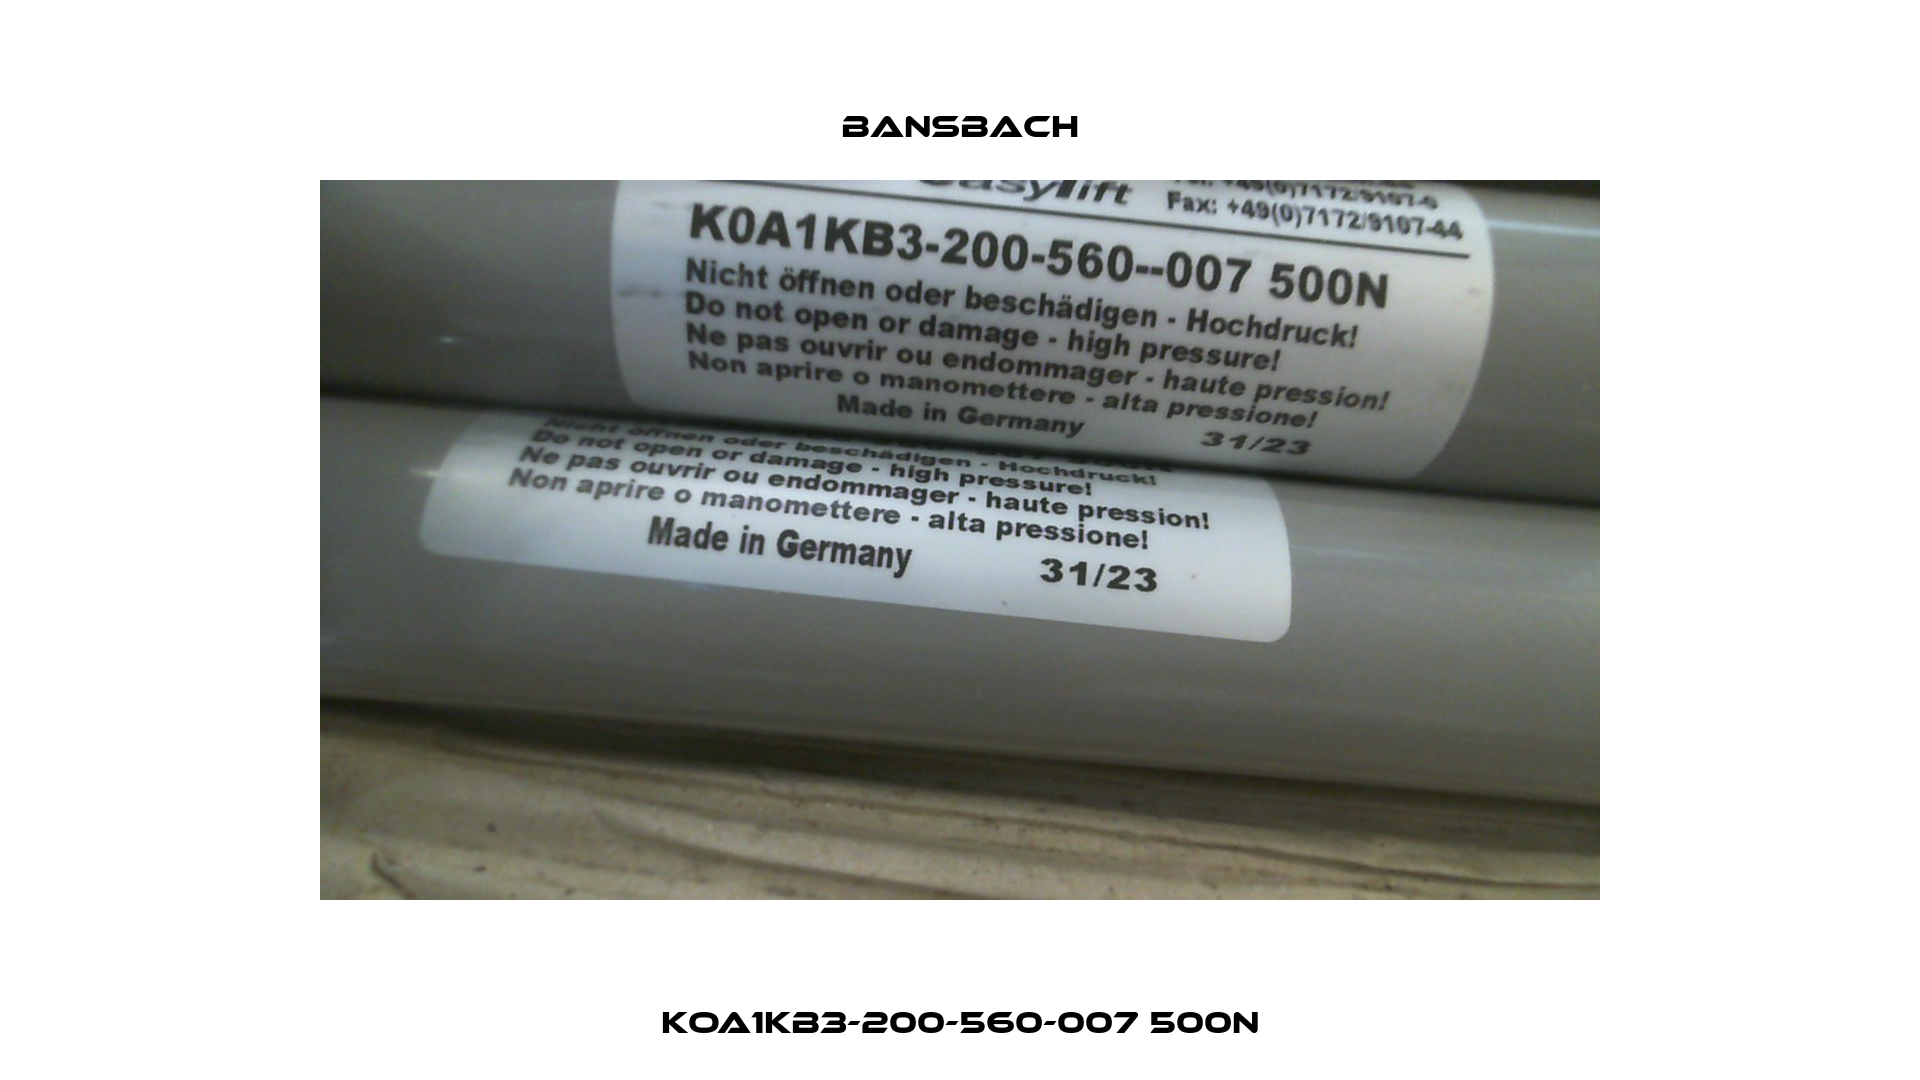 KOA1KB3-200-560-007 500N Bansbach